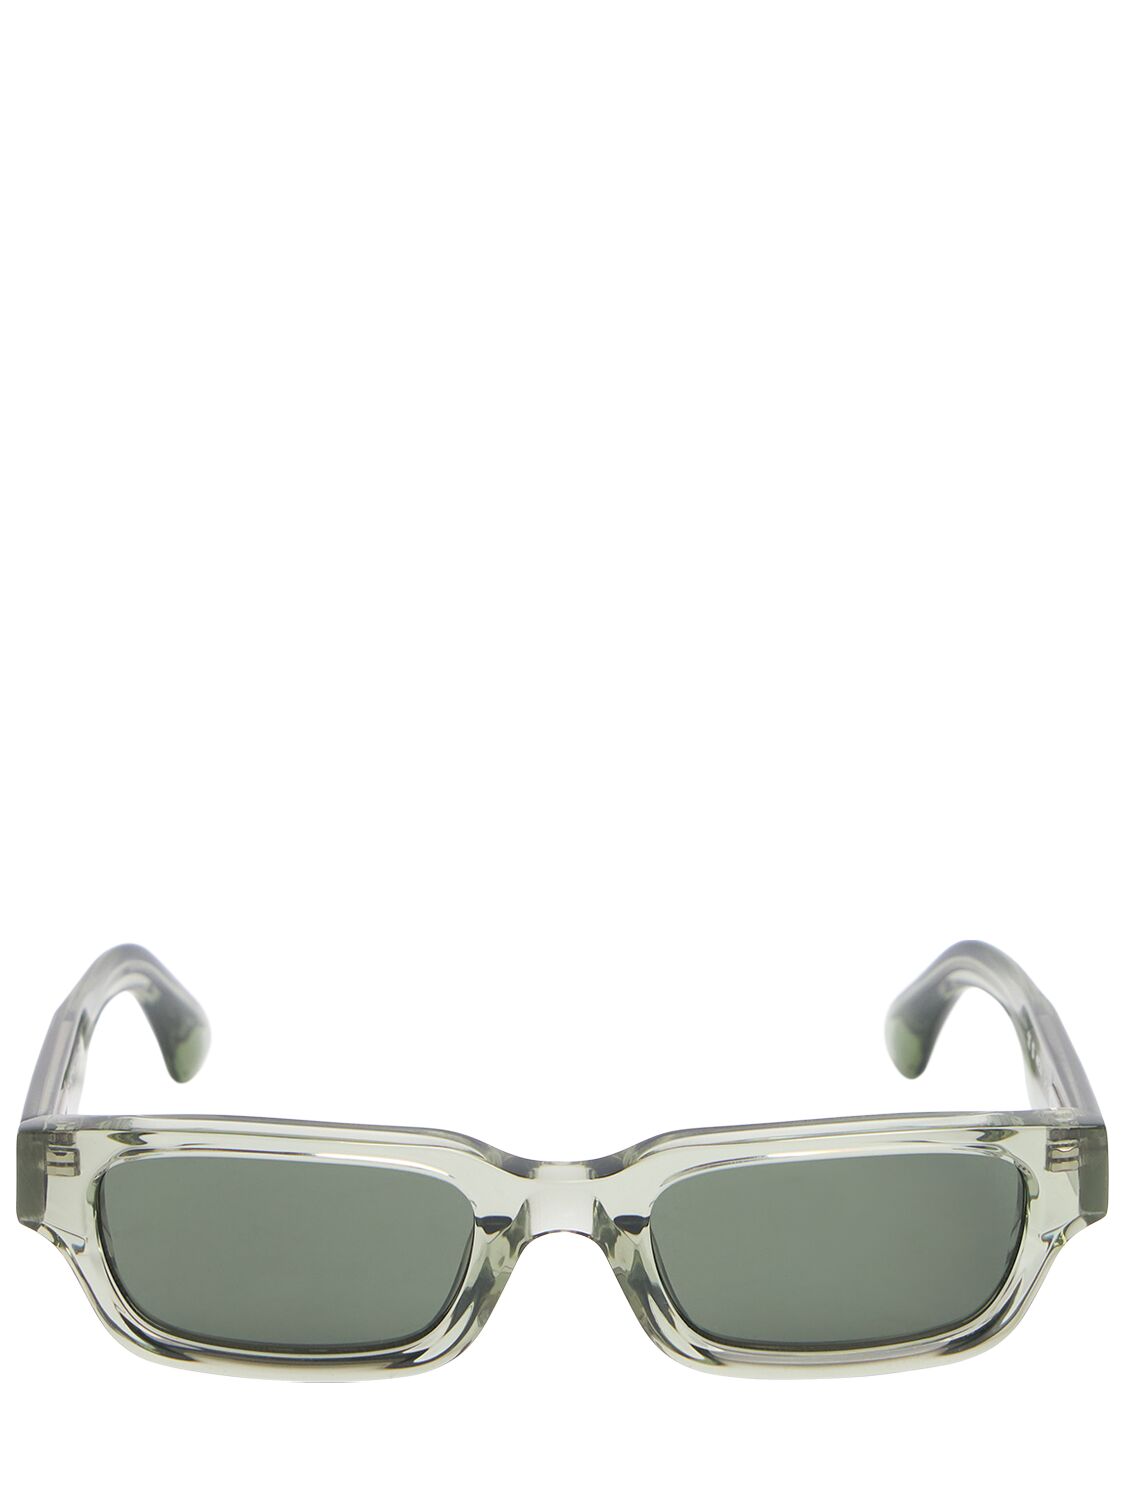 Chimi 10.3 Squared Acetate Sunglasses In Green